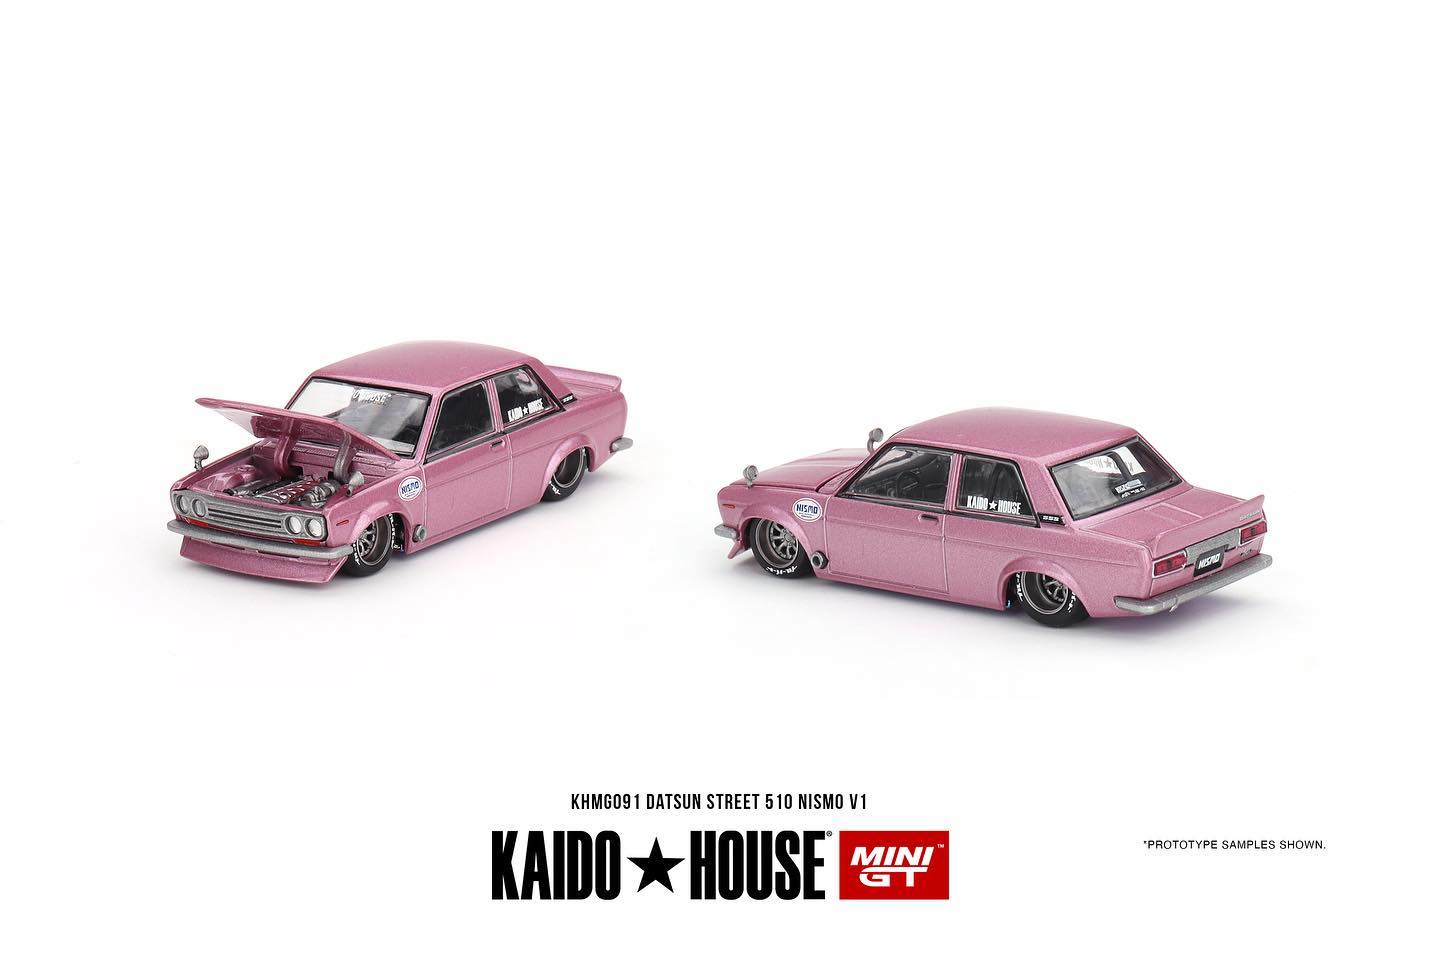 Mini GT x Kaido House Datsun 510 Street Nismo V1